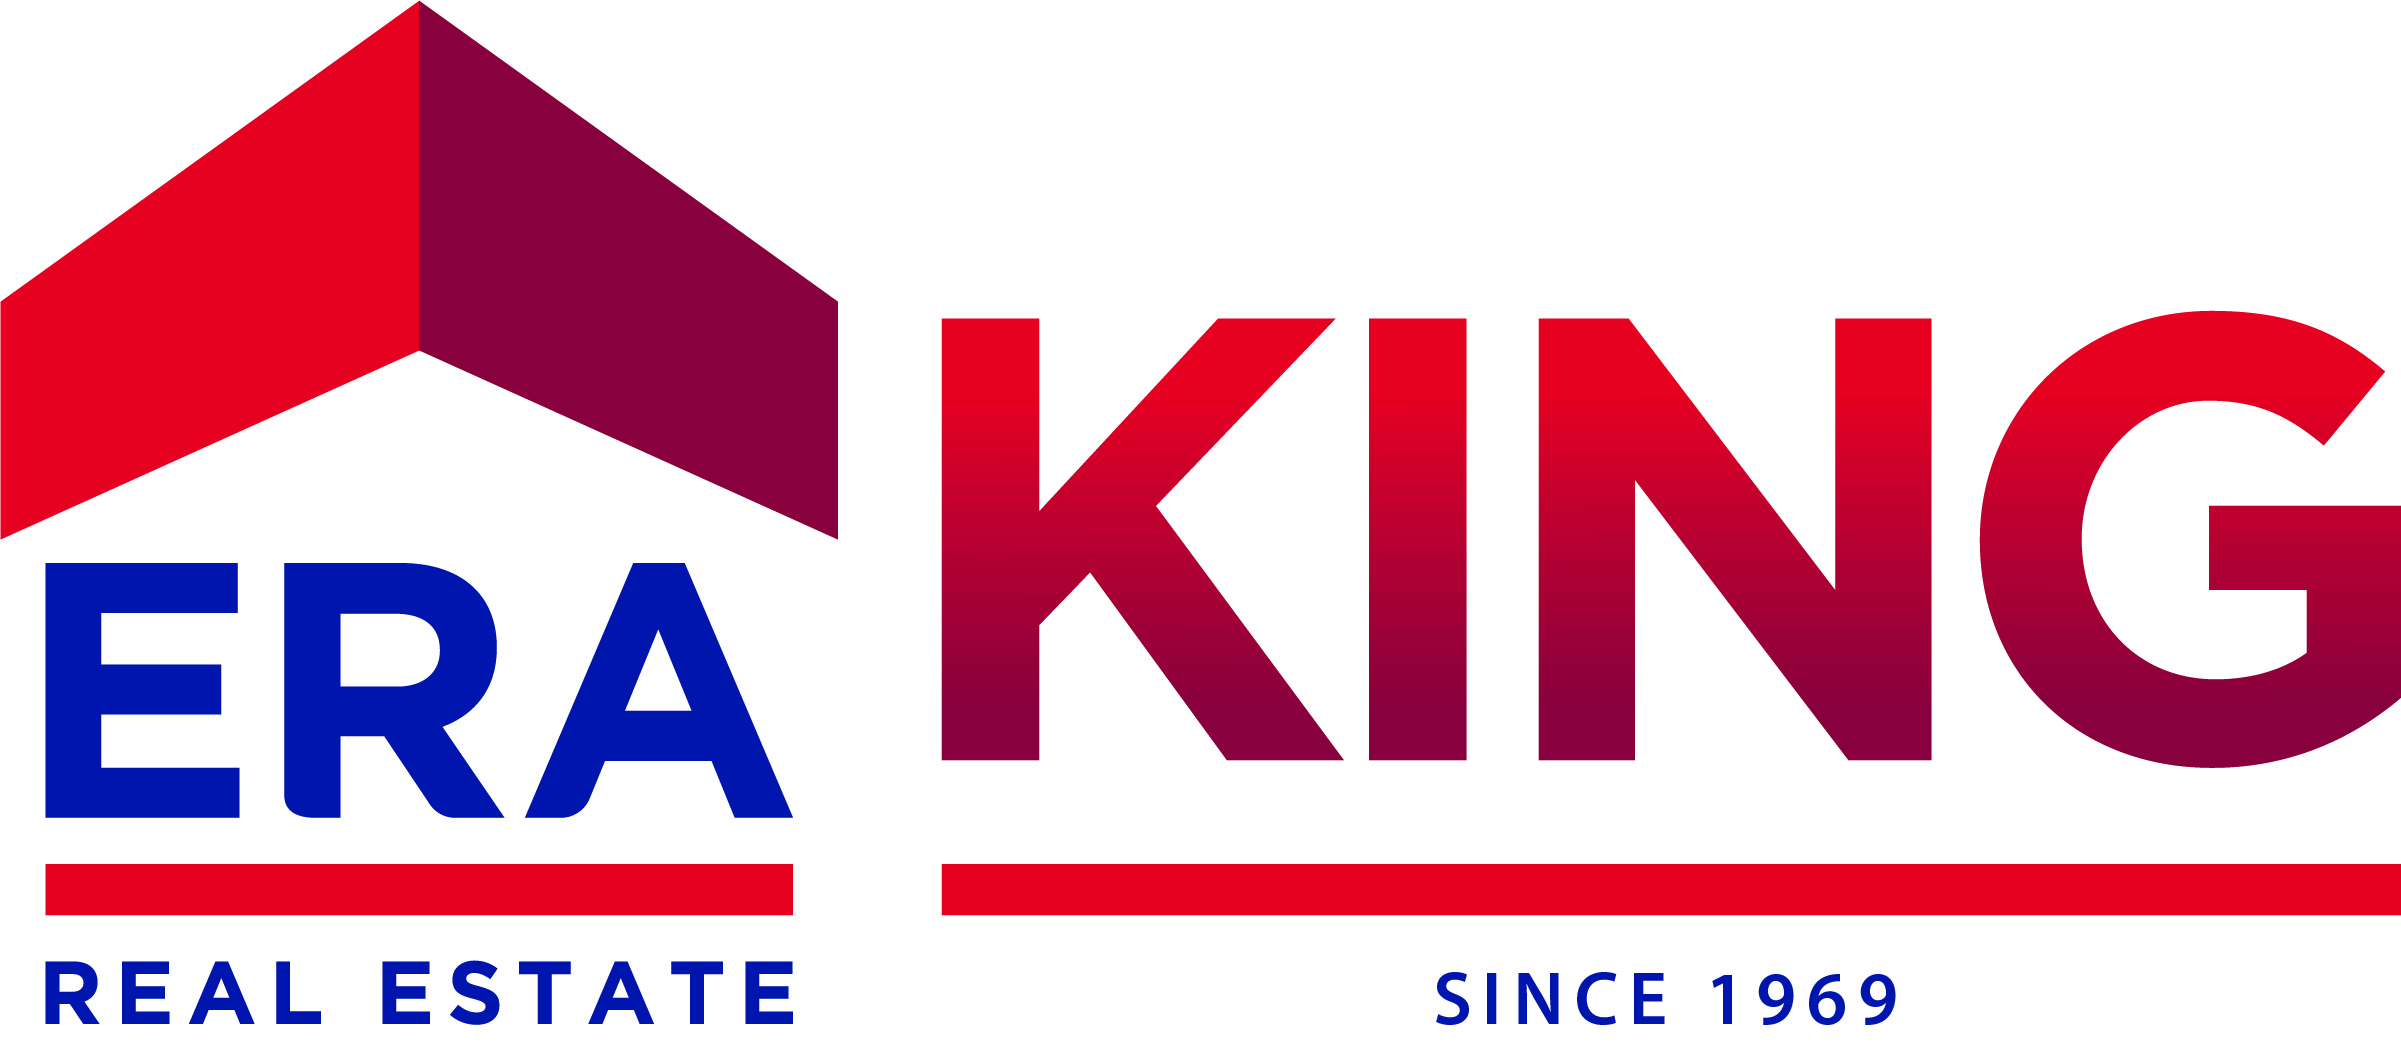 ERA King Real Estate Company, Inc.,Madison,ERA King Real Estate Company, Inc.